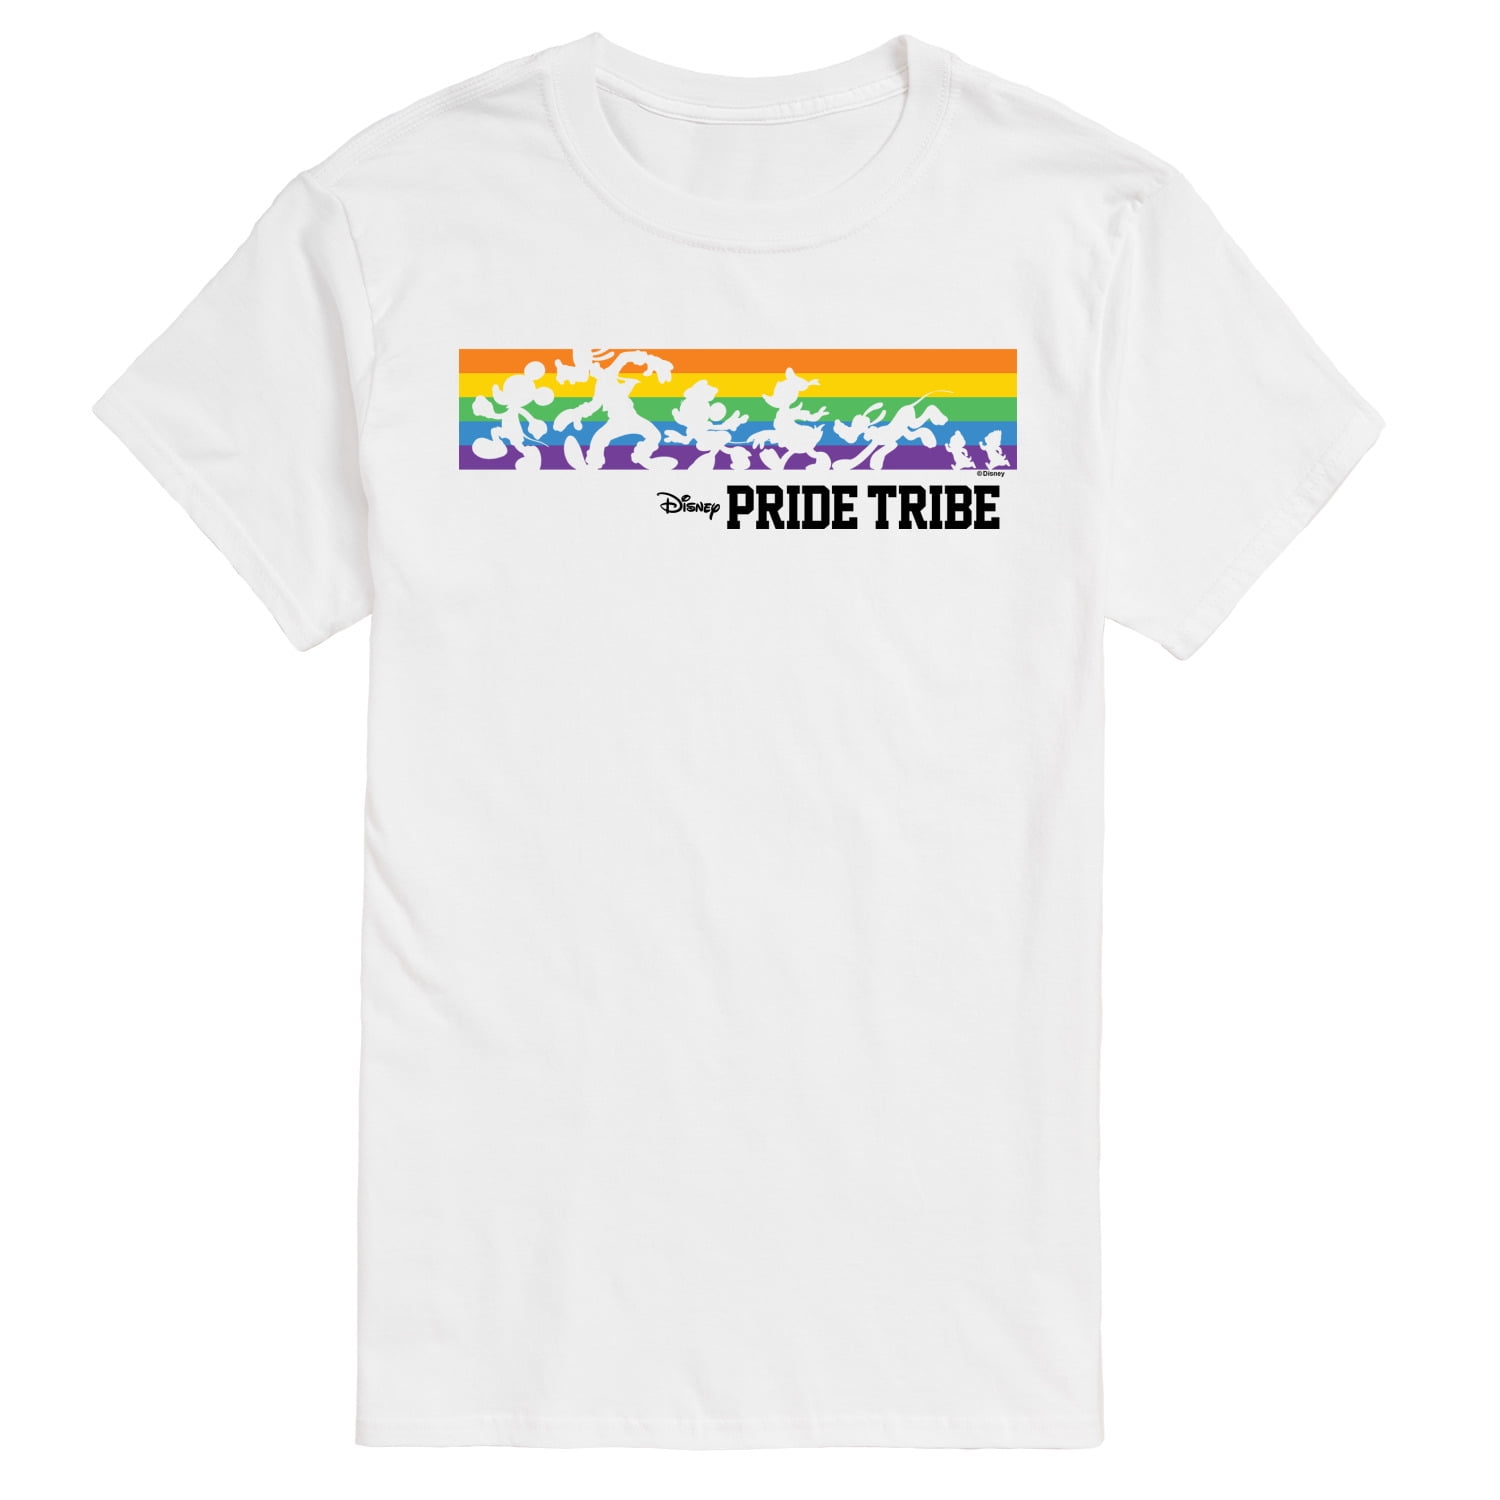 Disney Pride - Pride Tribe - Mickey, Goofy, Minnie, Donald Duck, & Pluto -  Men's Short Sleeve Graphic T-Shirt 